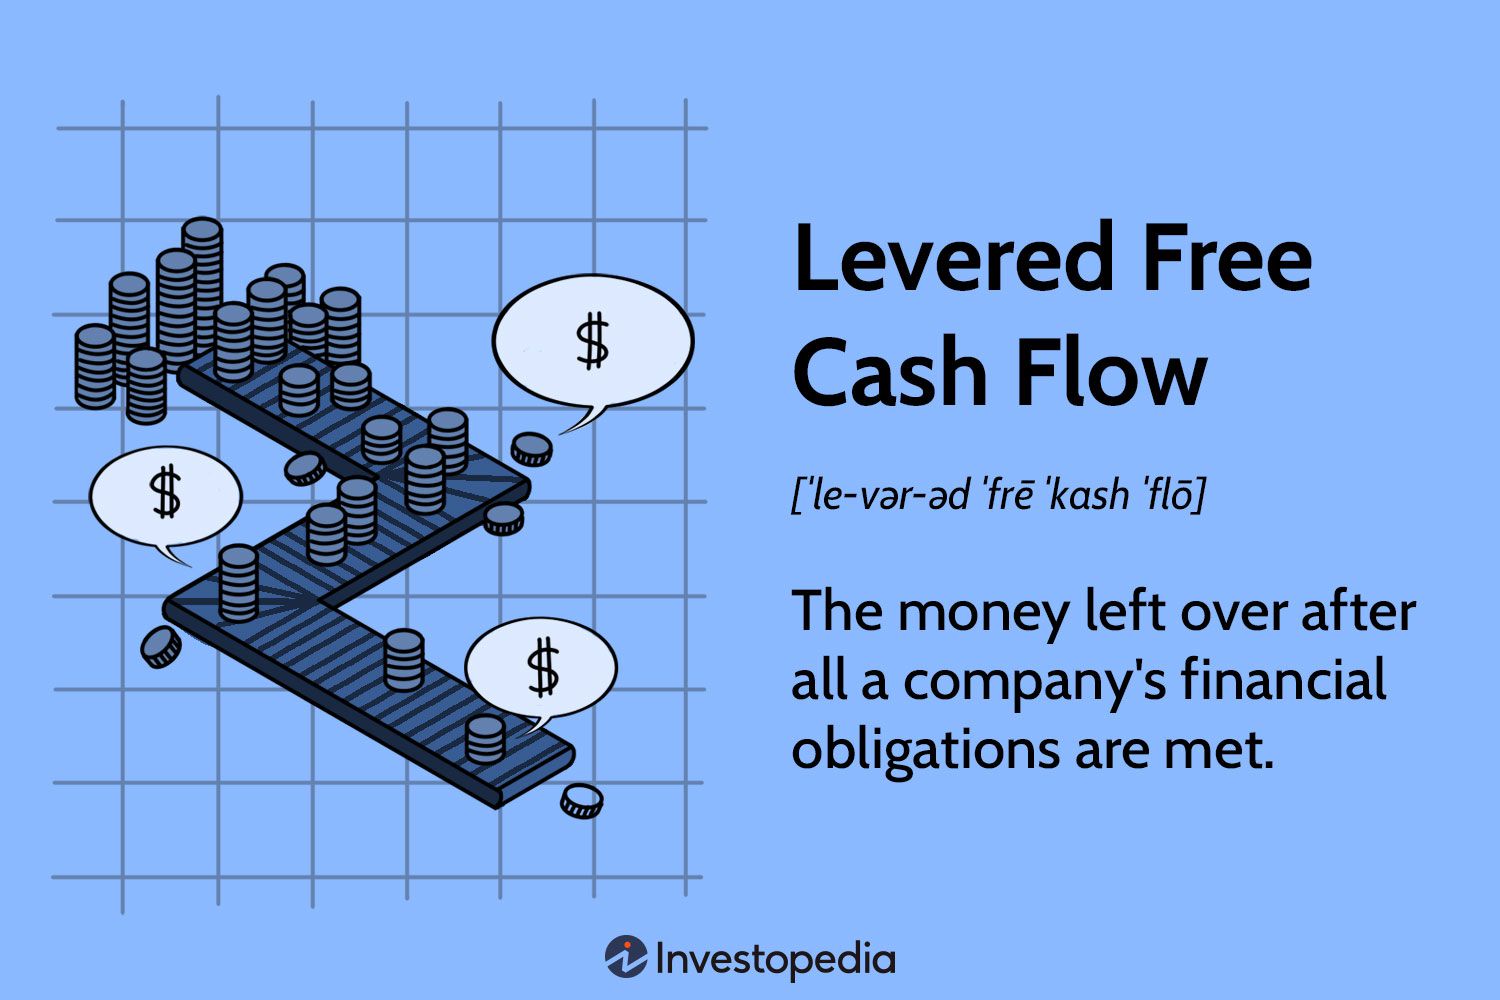 Levered Free Cash Flow